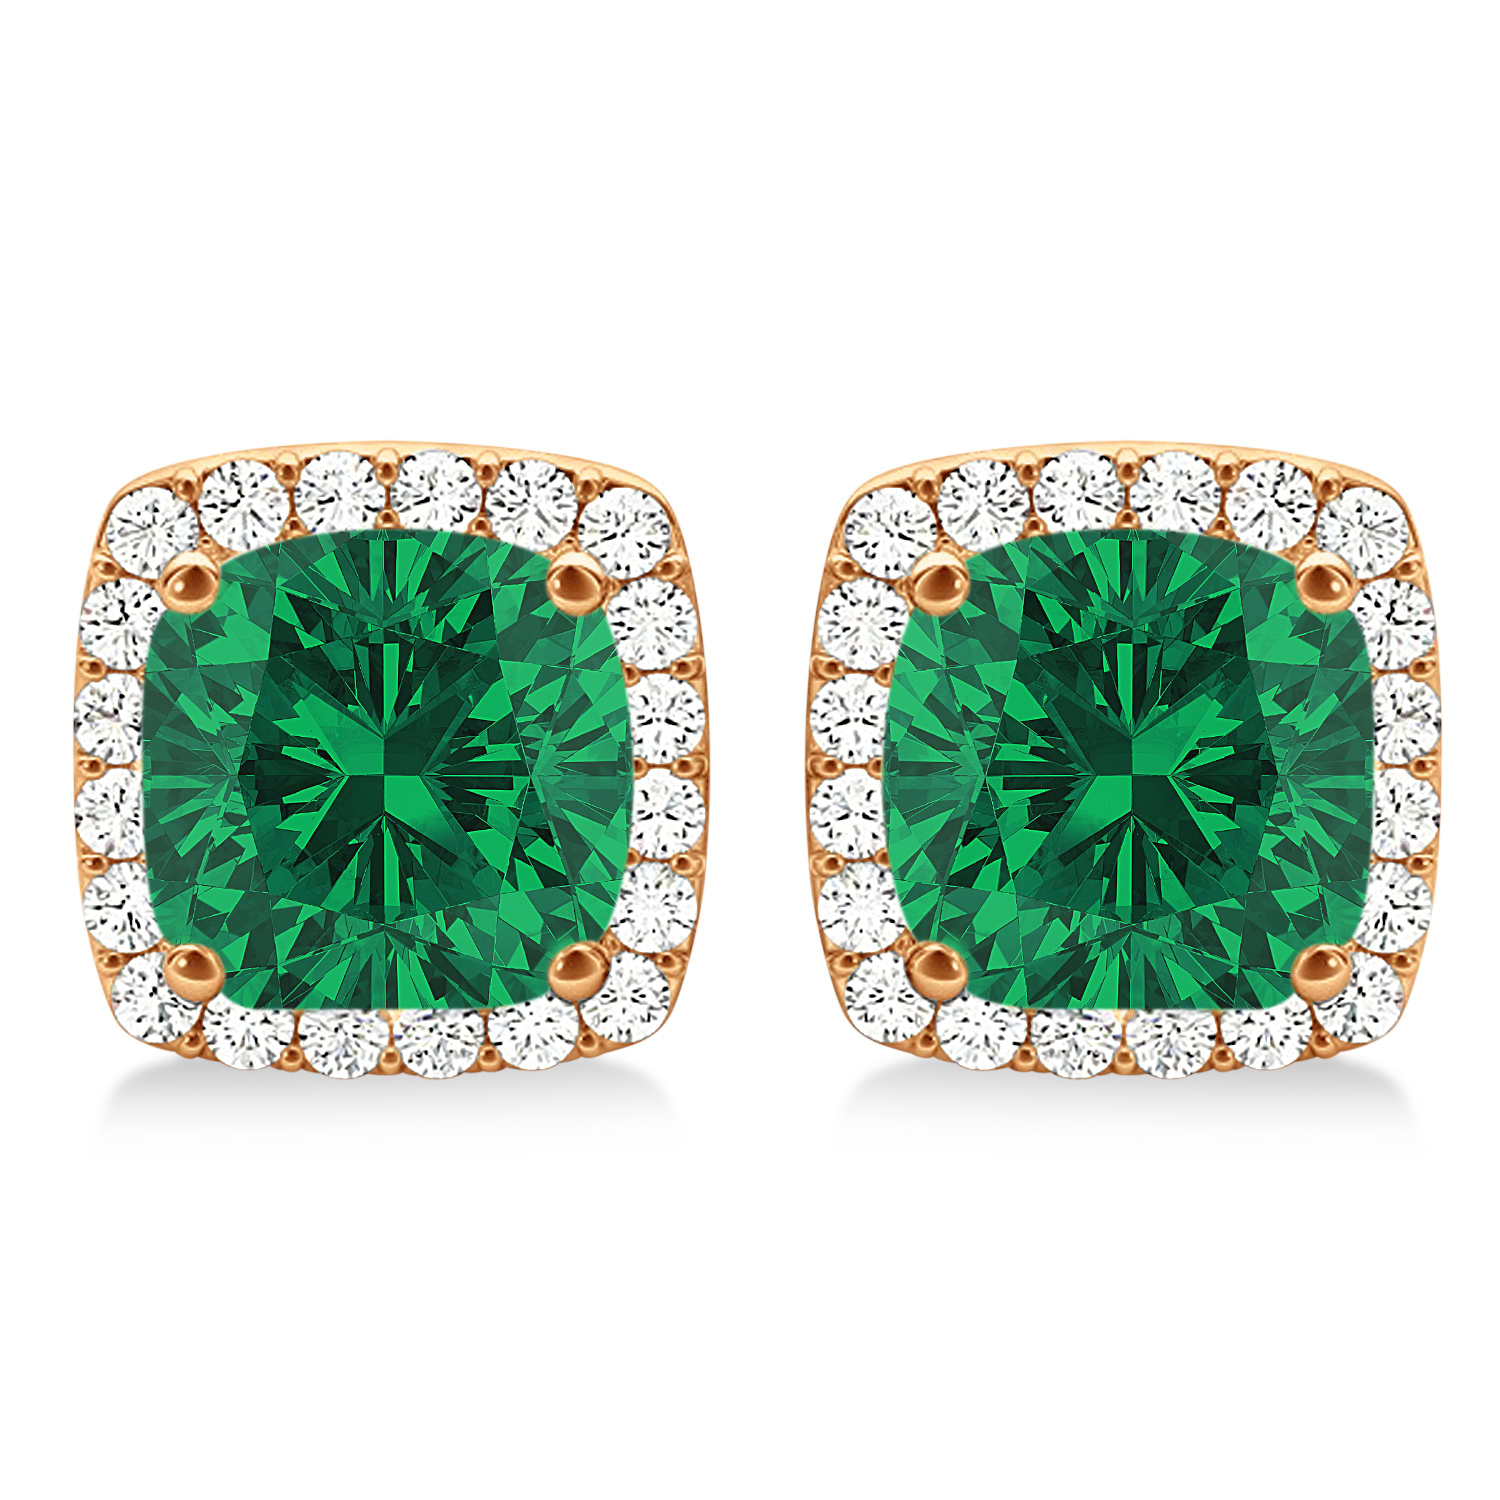 Cushion Cut Emerald & Diamond Halo Earrings 14k Rose Gold (1.50ct)